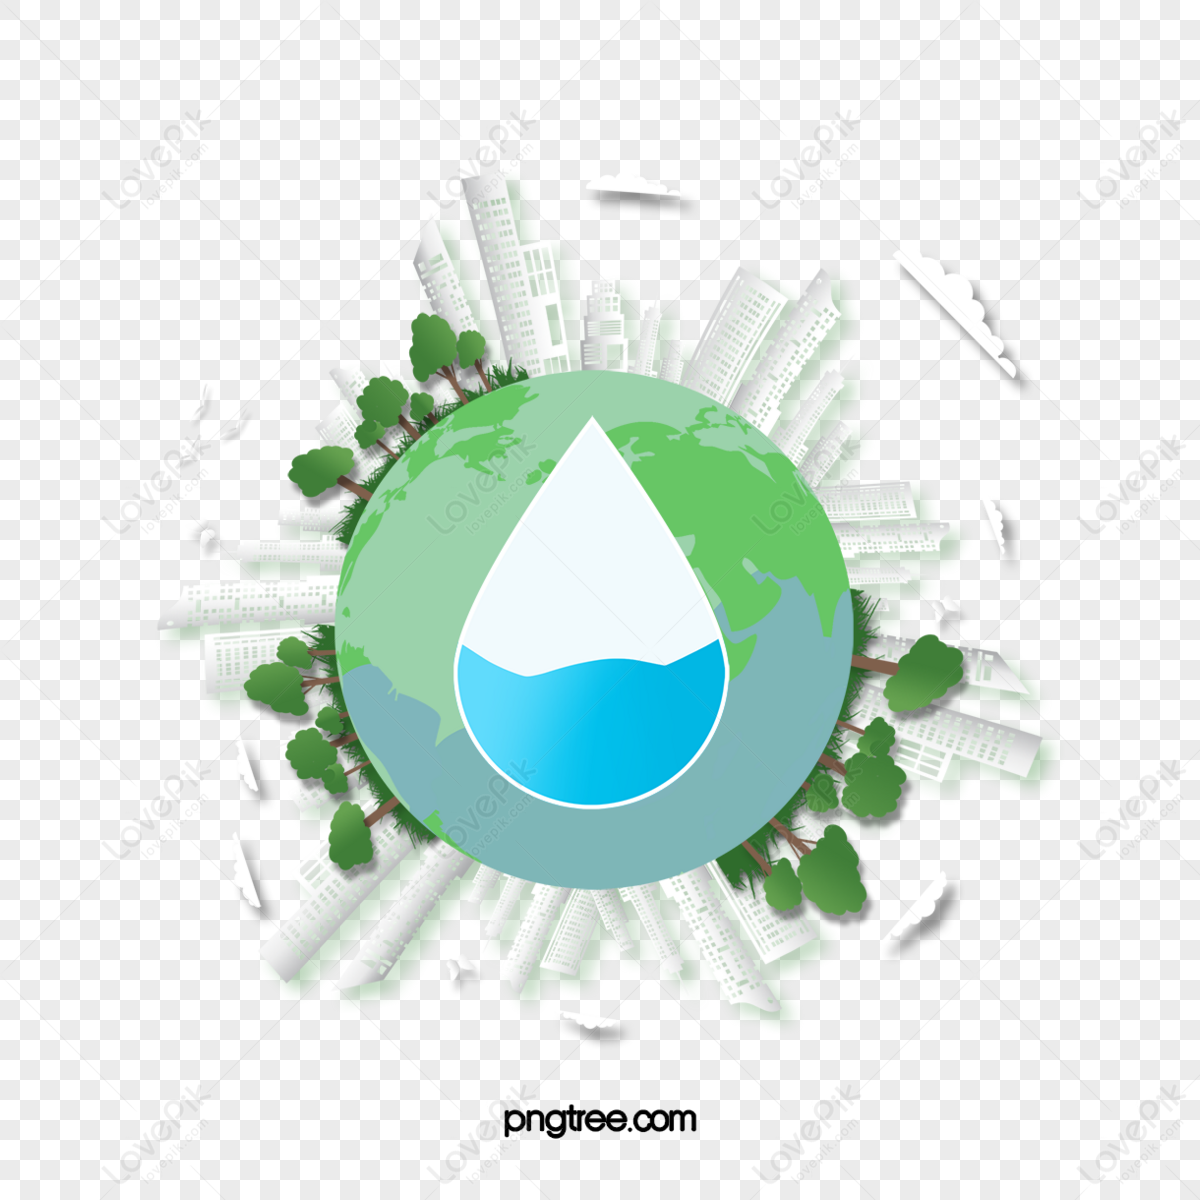 Save water logo vector image | Free SVG